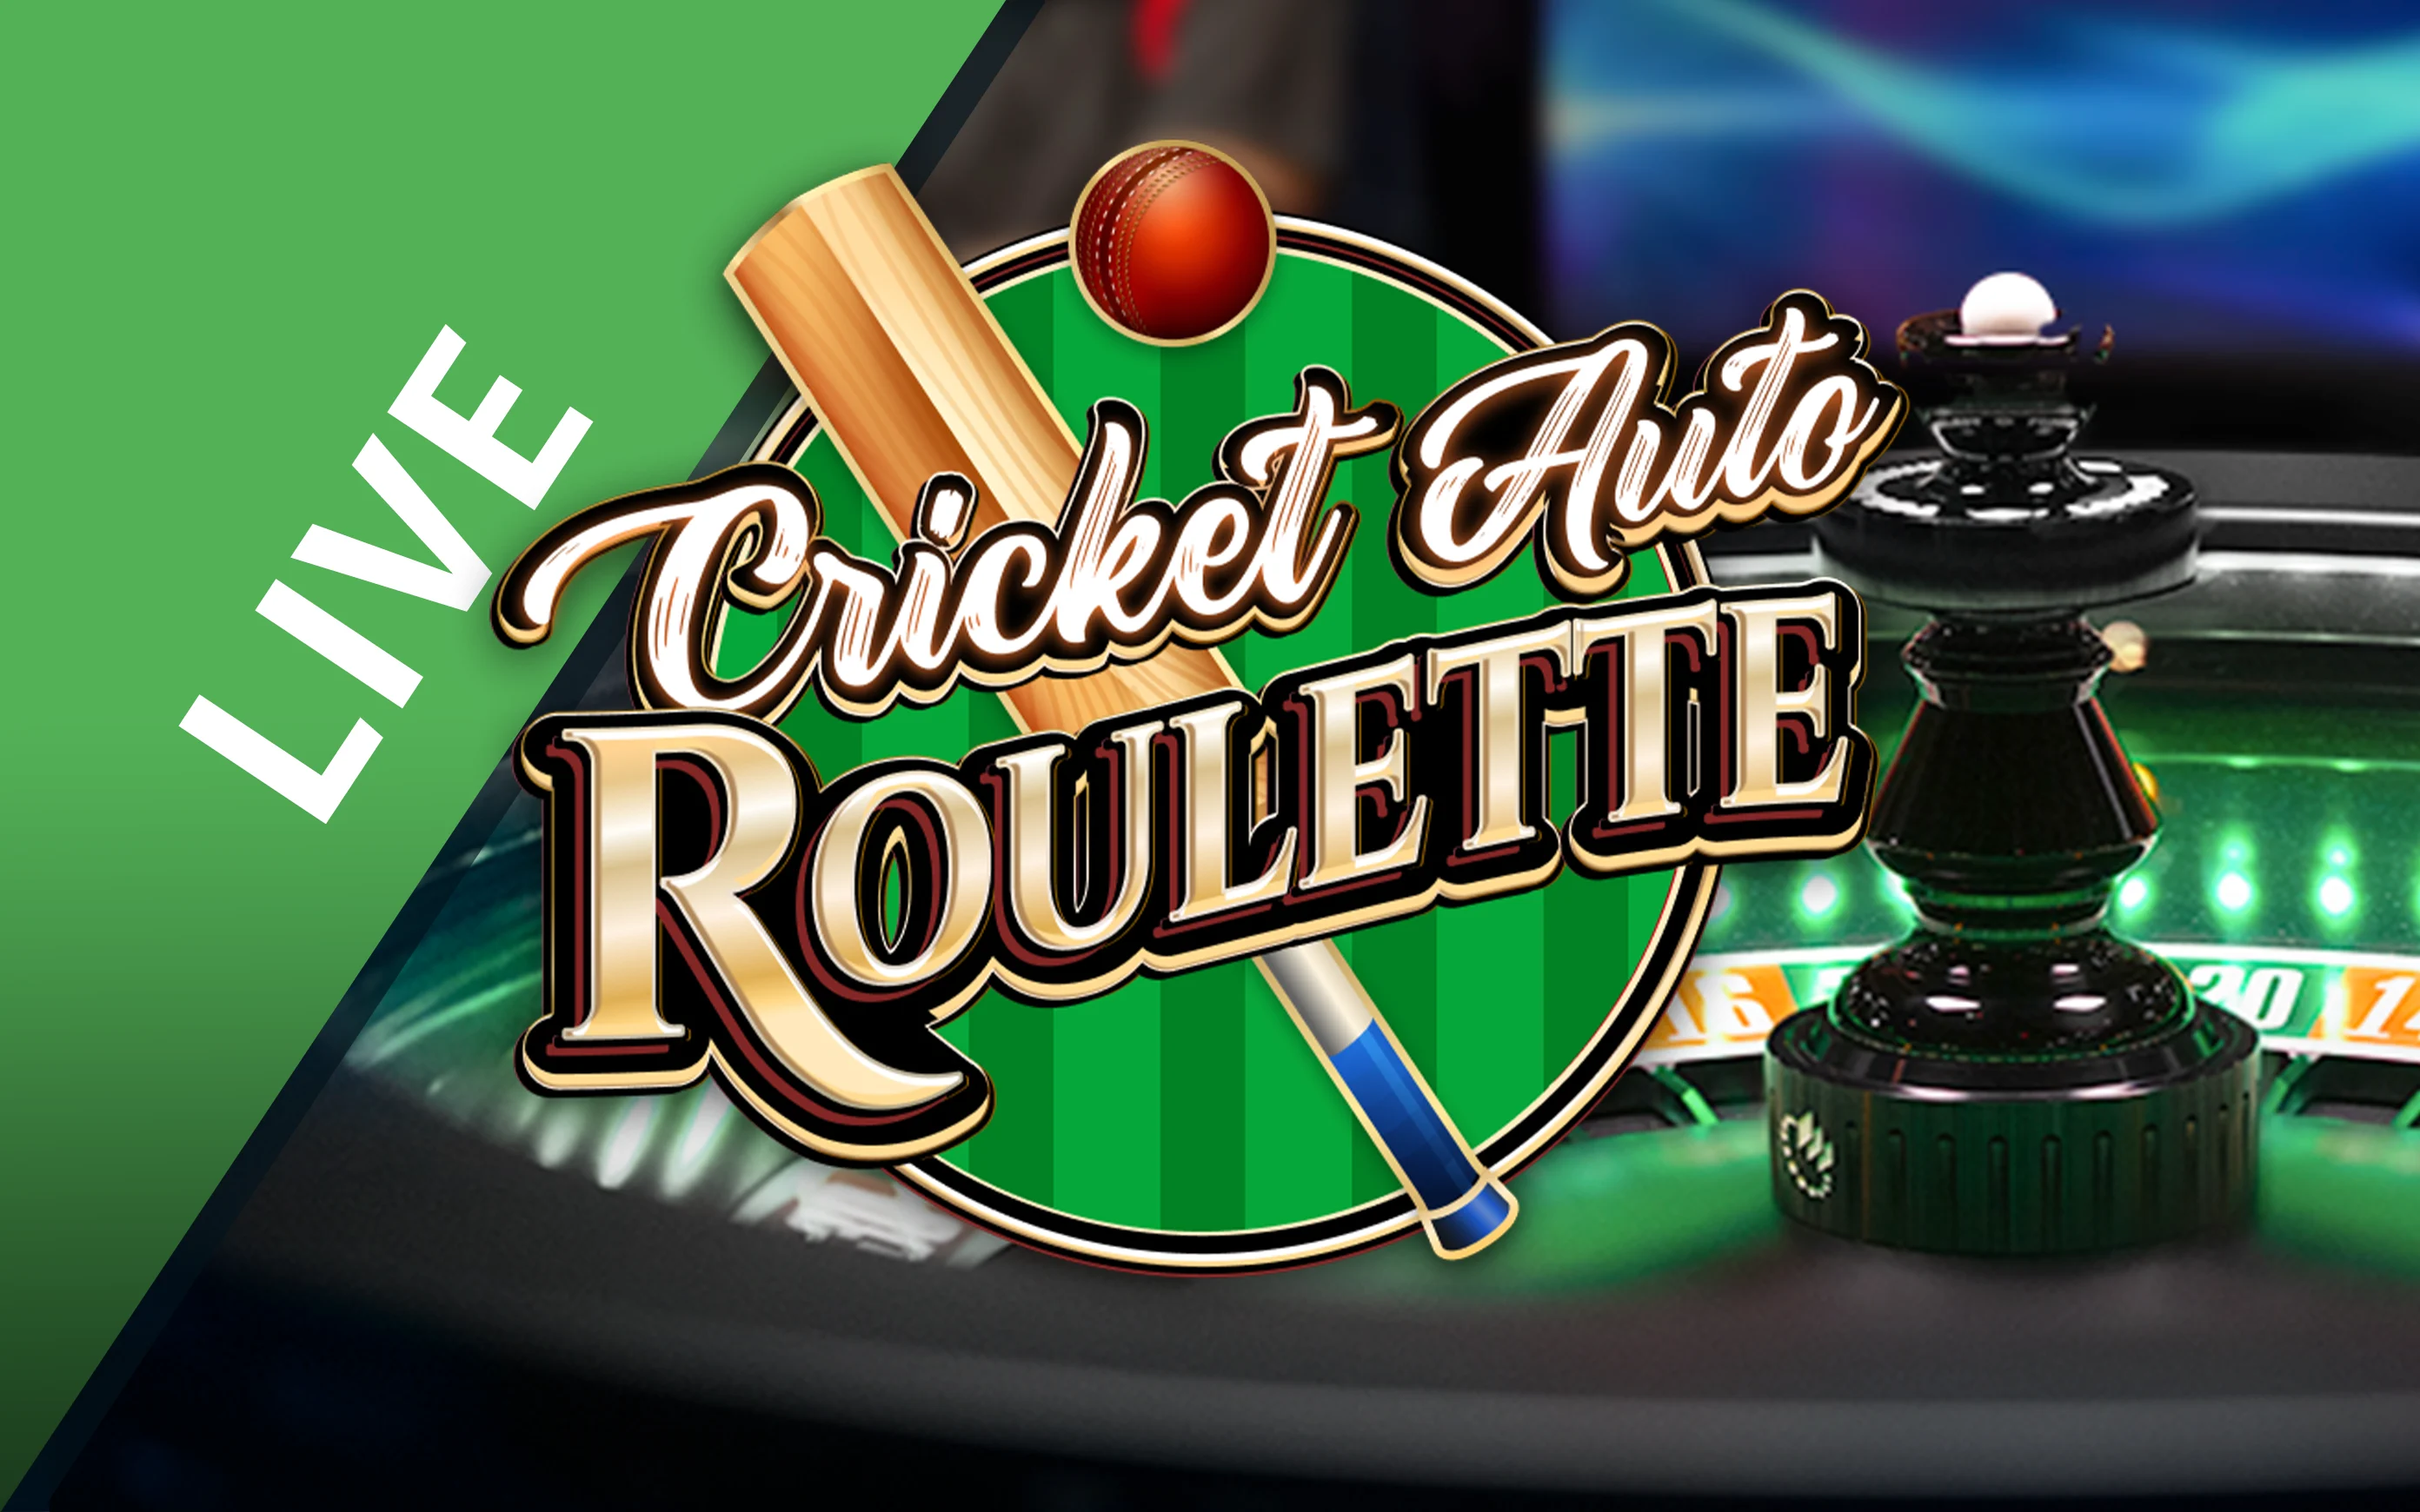 Грайте у Cricket Auto Roulette в онлайн-казино Starcasino.be